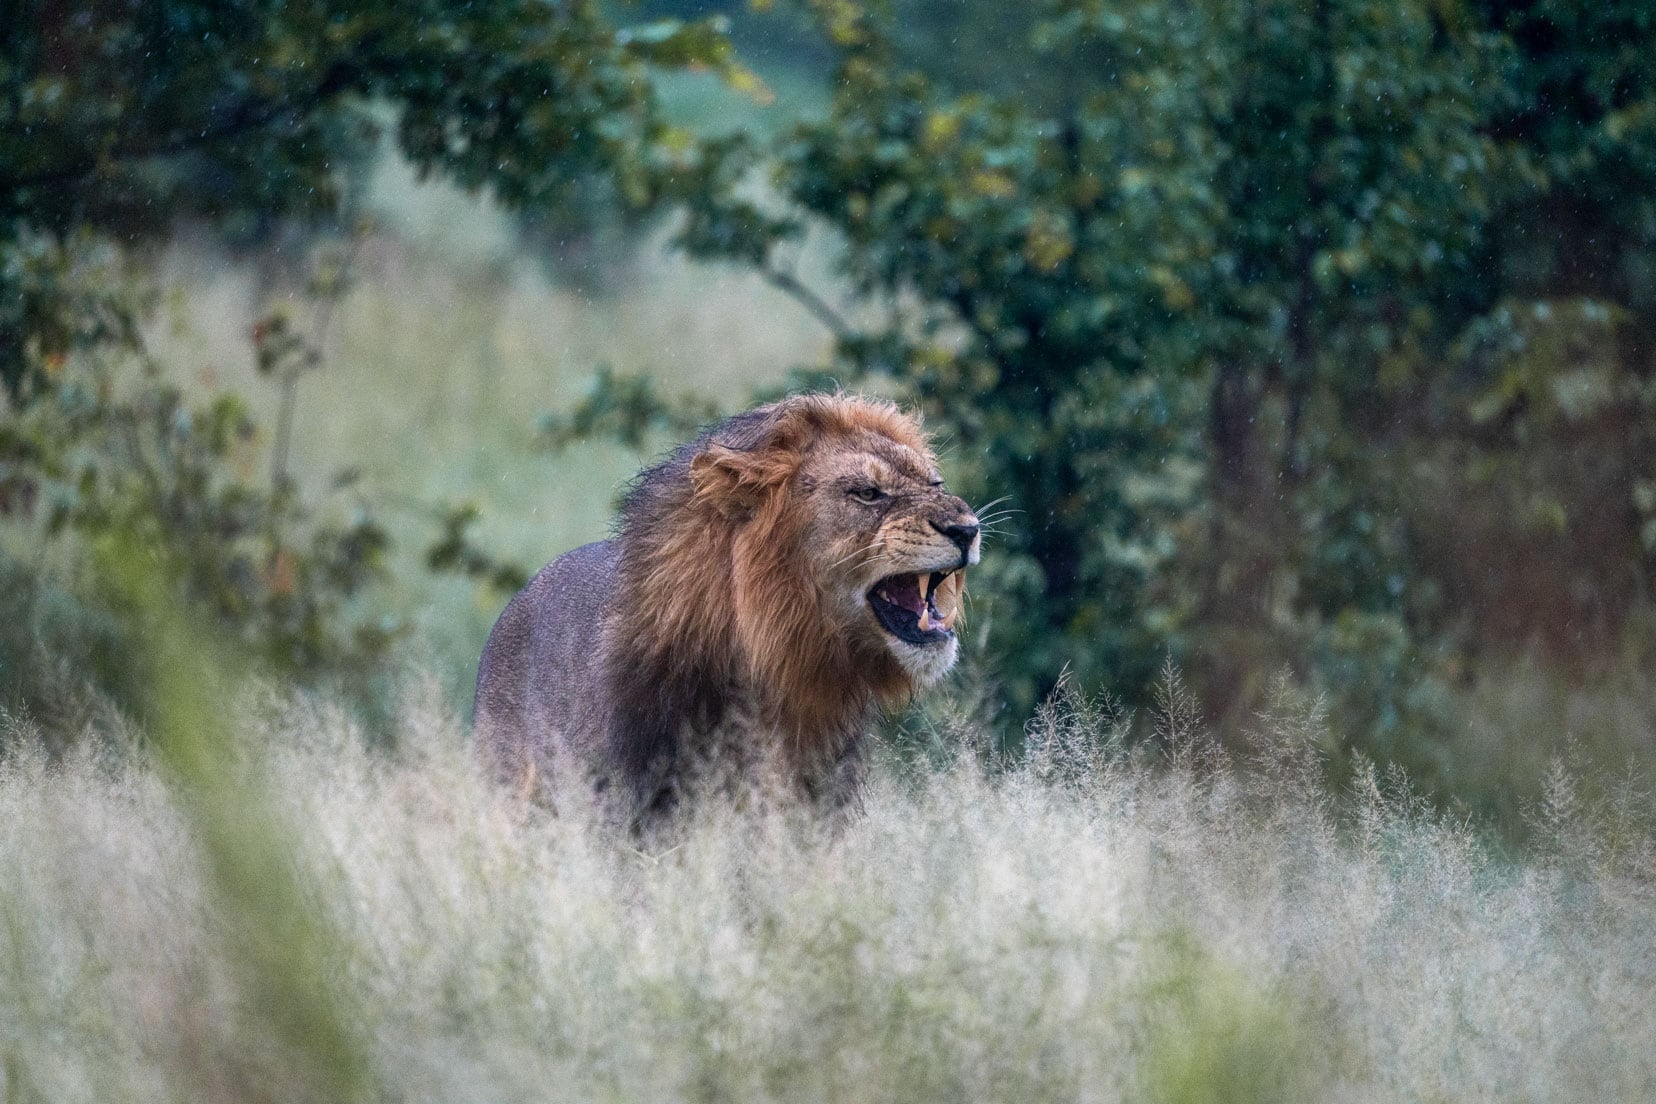 lion stood in long grass roaring in the rain 